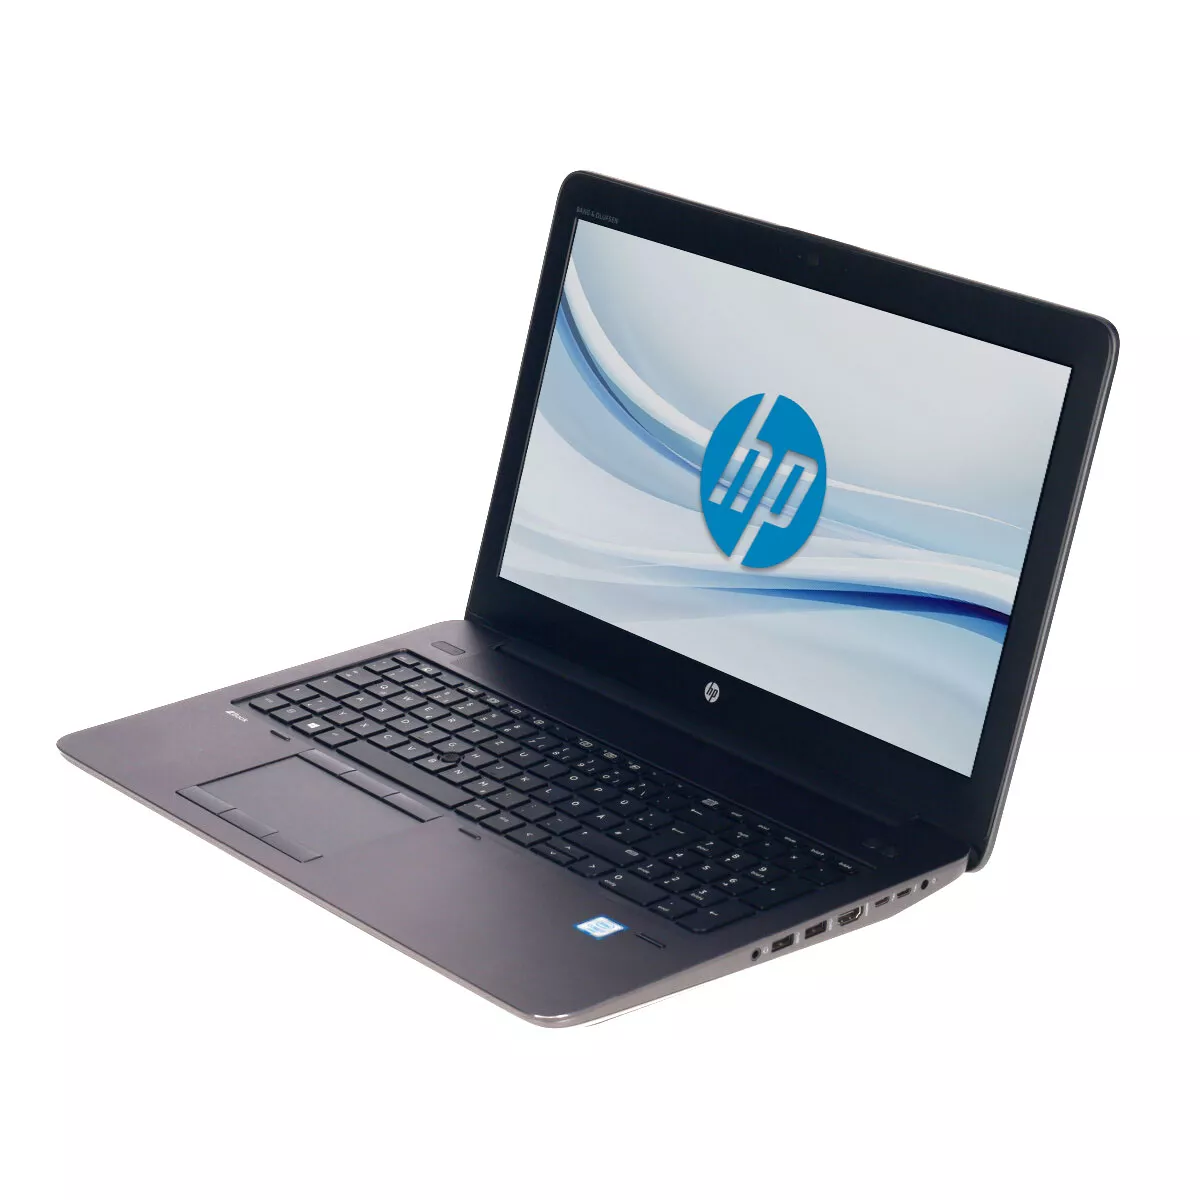 HP ZBook 15 G2 Core i7 4810MQ nVidia Quadro K2100M 2,0 GB Full-HD Webcam B-Ware